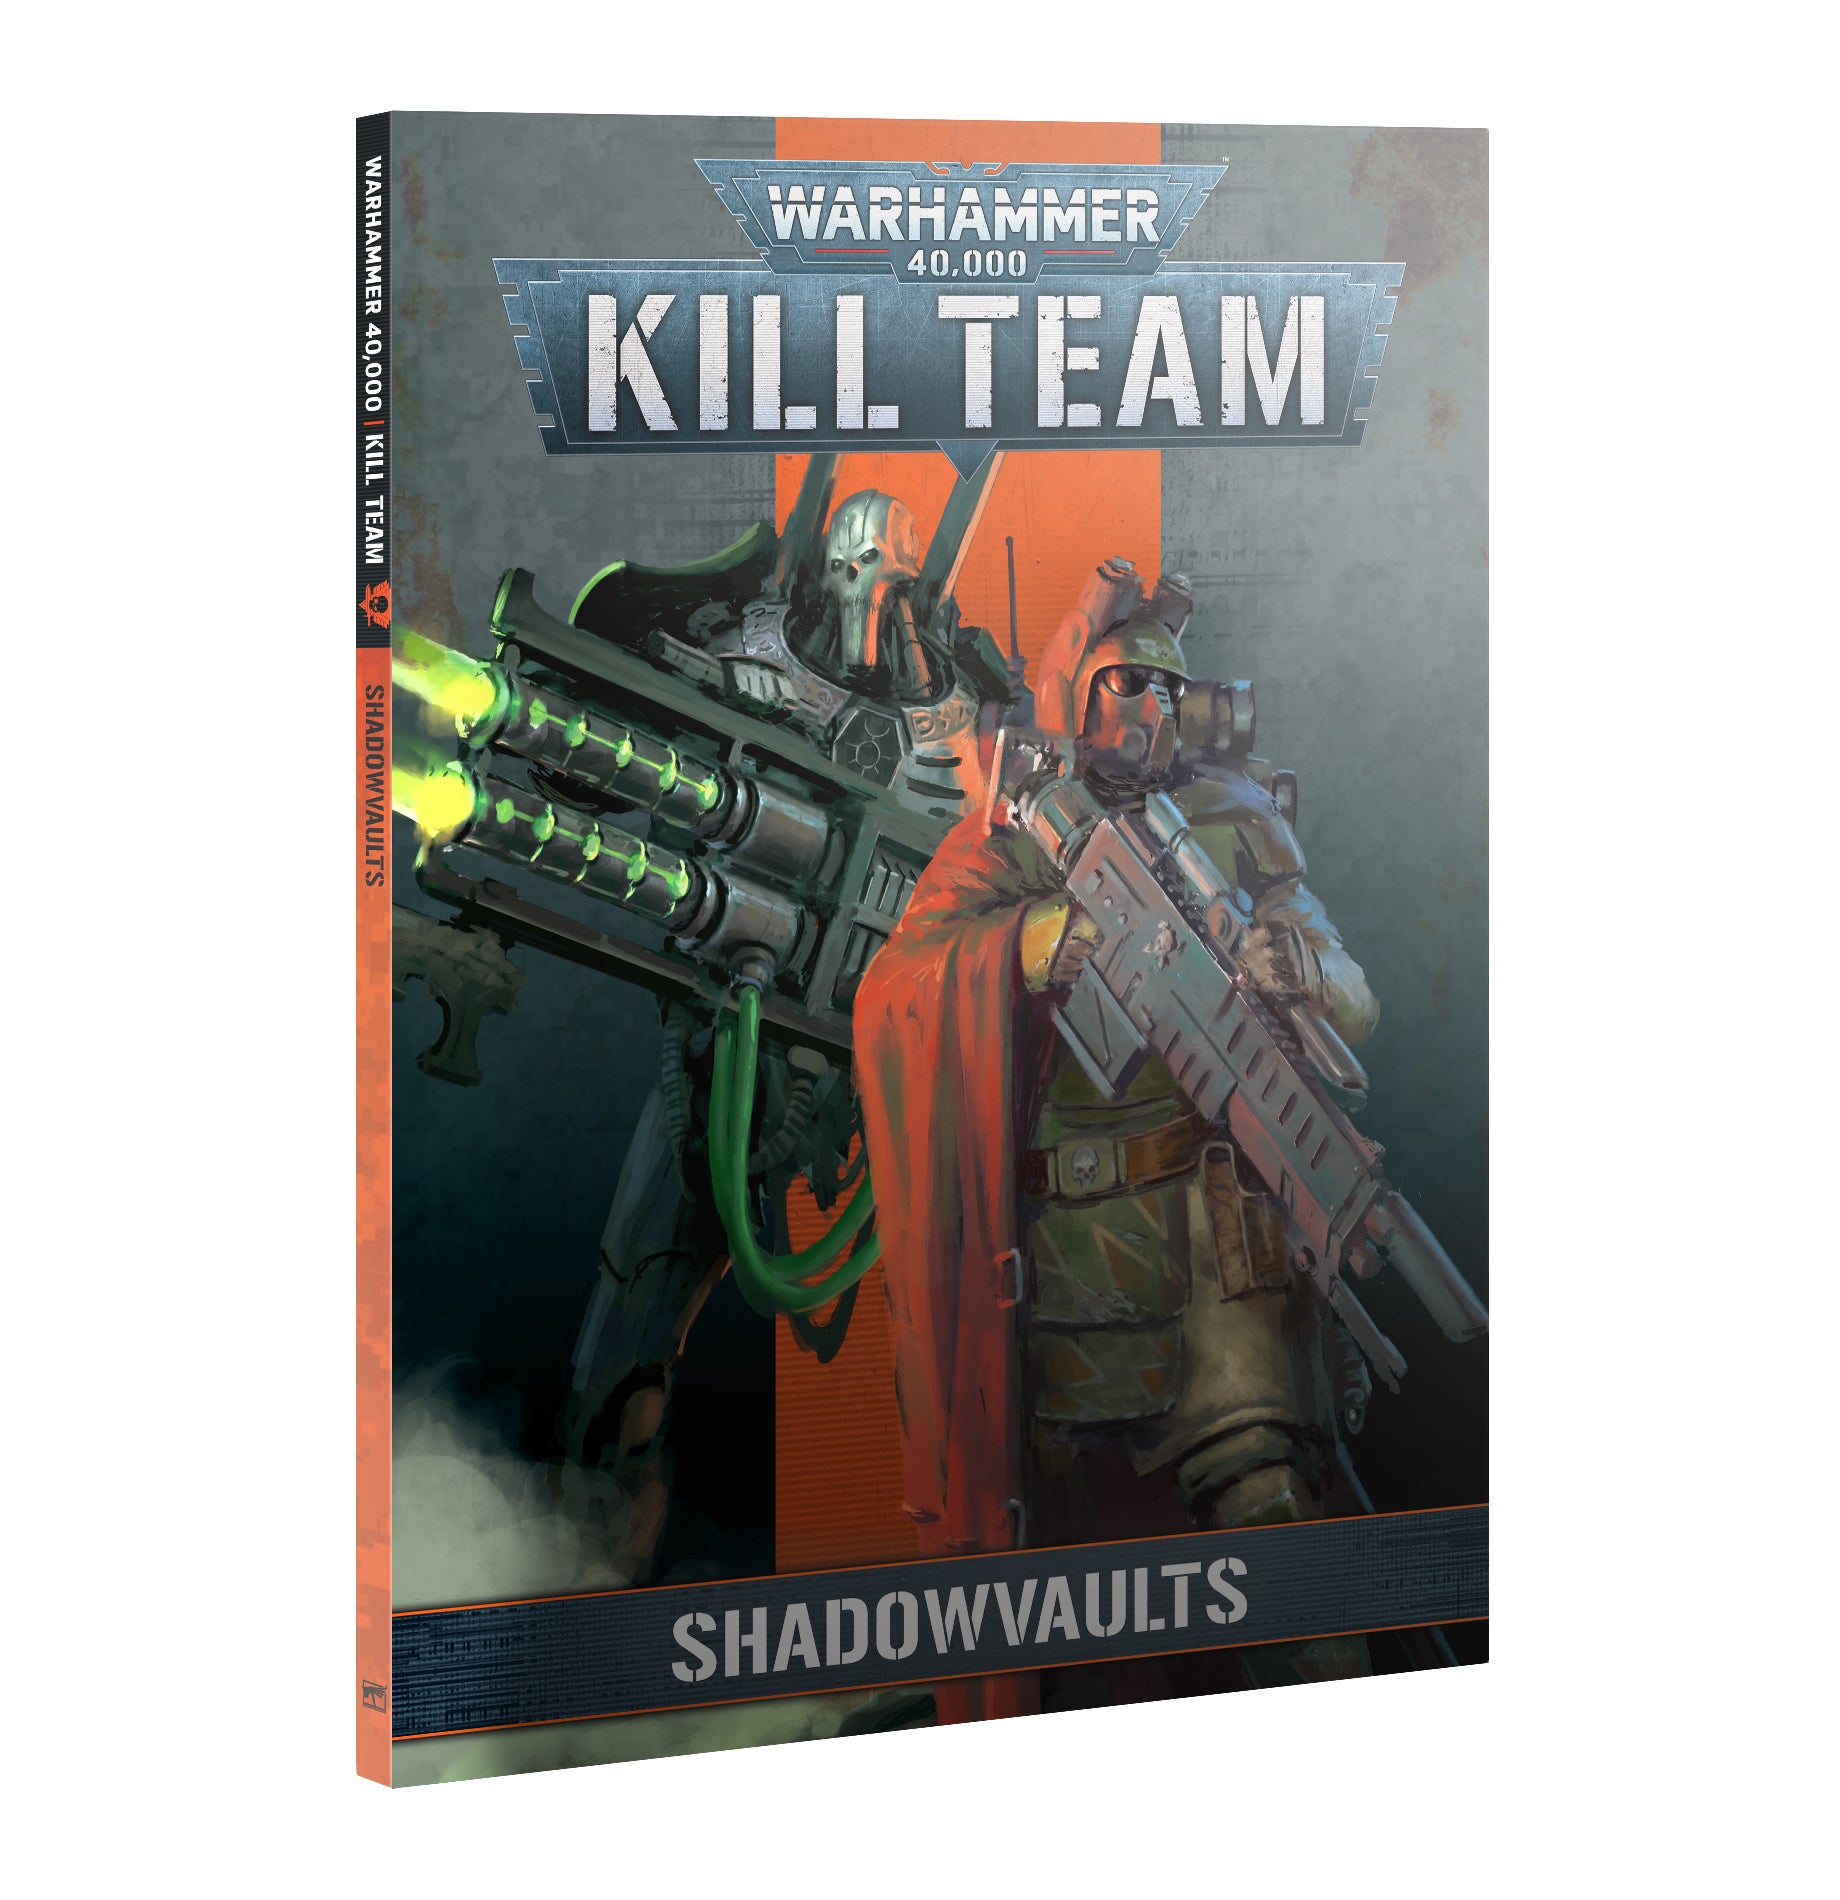 Kill Team: Codex Shadowvaults